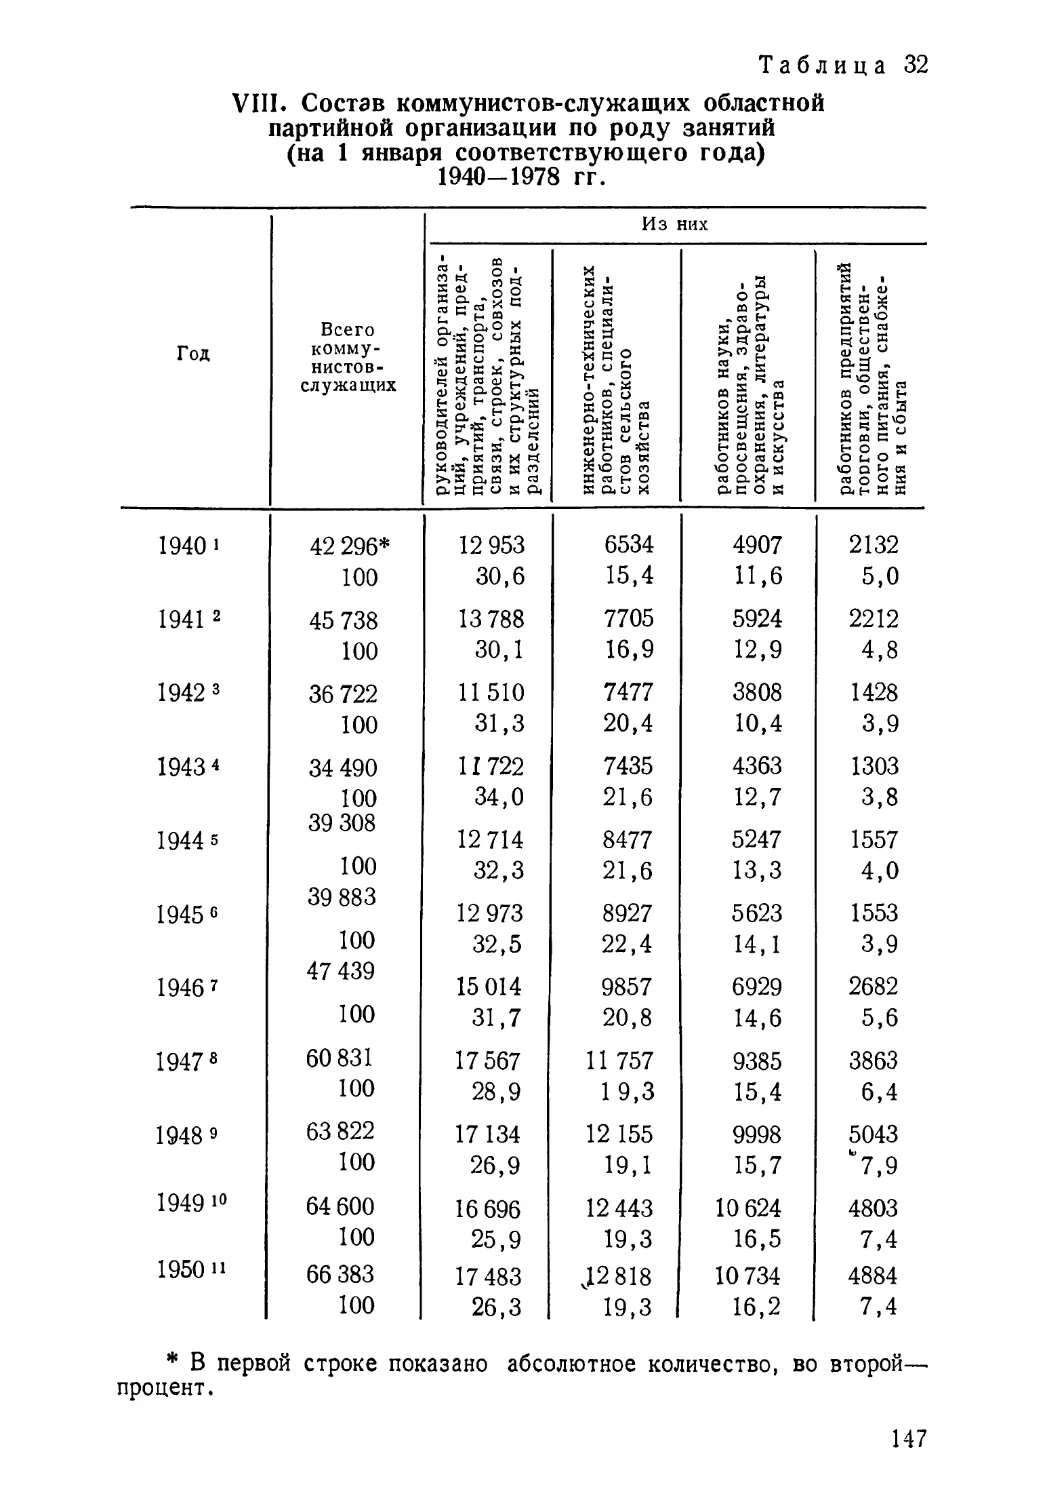 Состав коммунистов-служащих по роду занятий 1940—1978 гг. Таблица 32